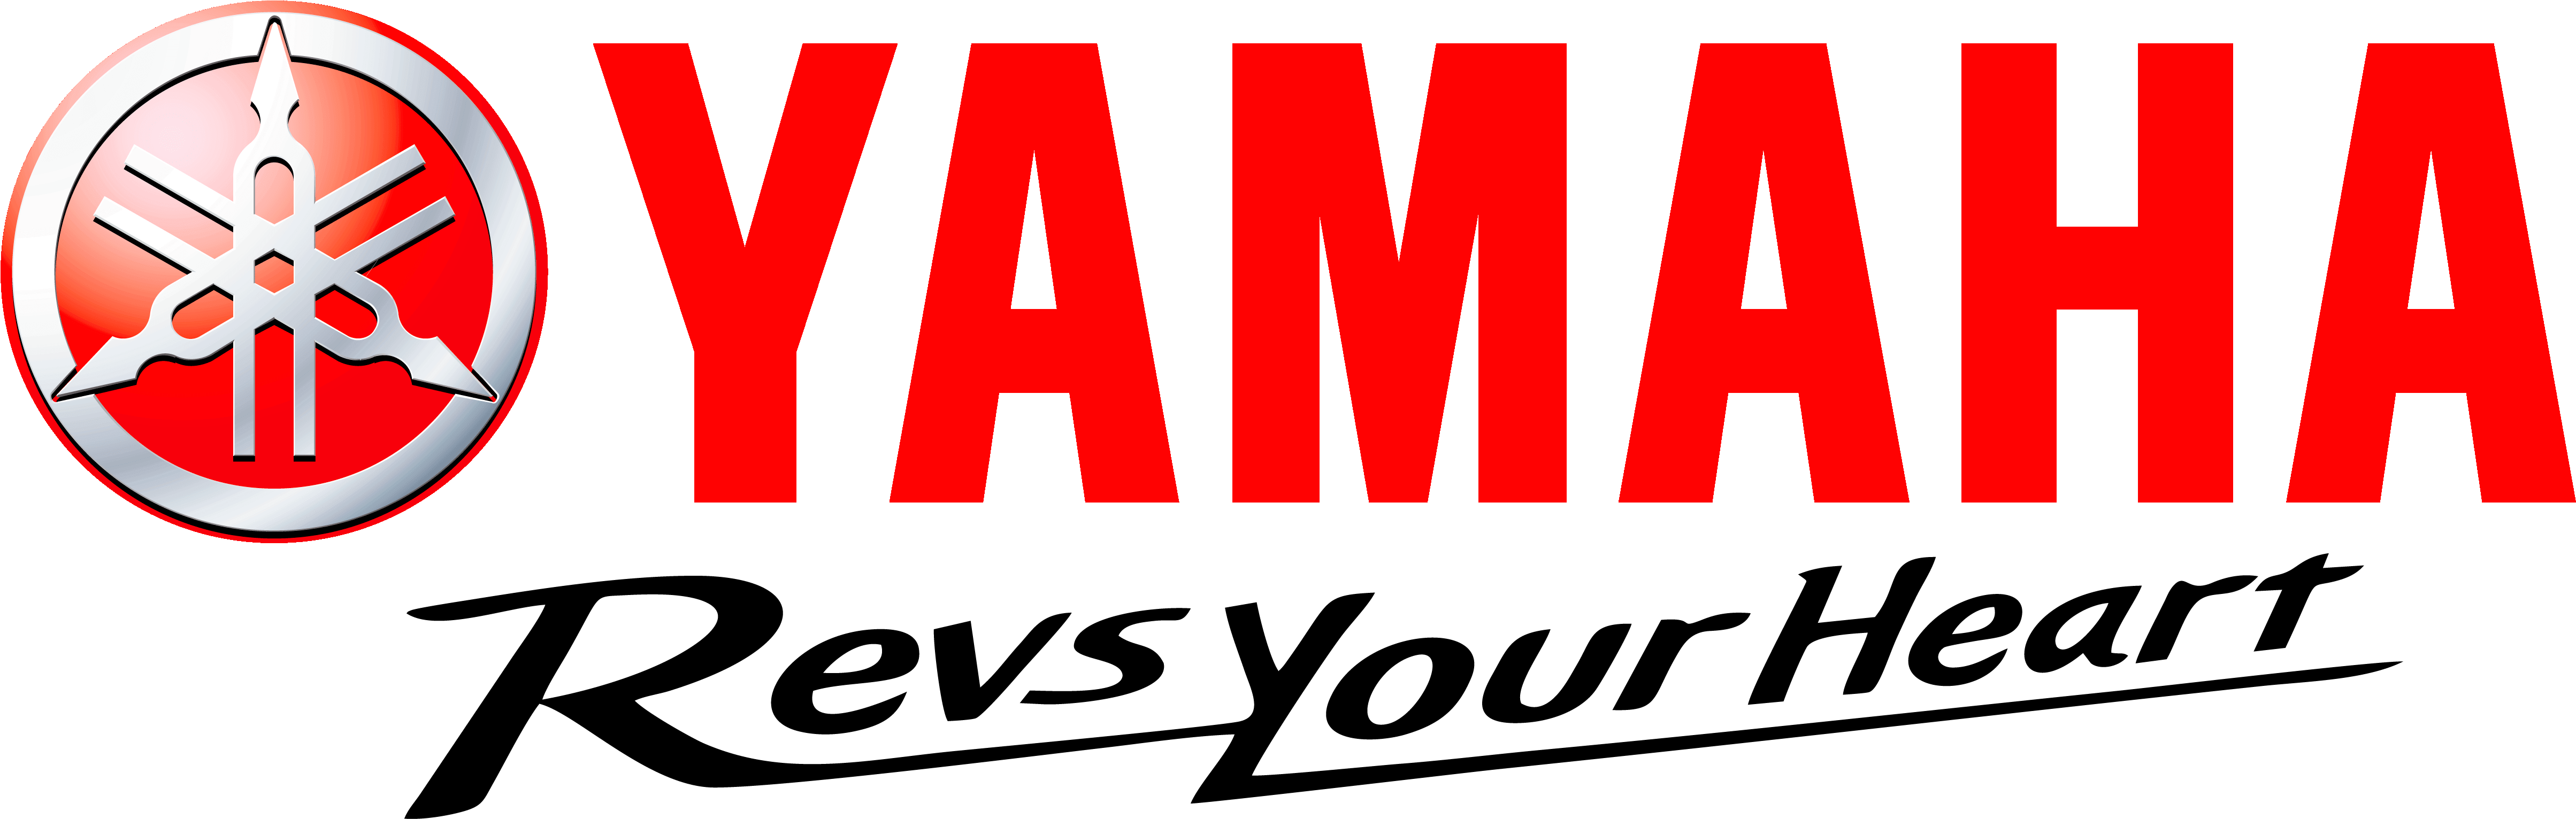 Yamaha Logowith Tagline PNG